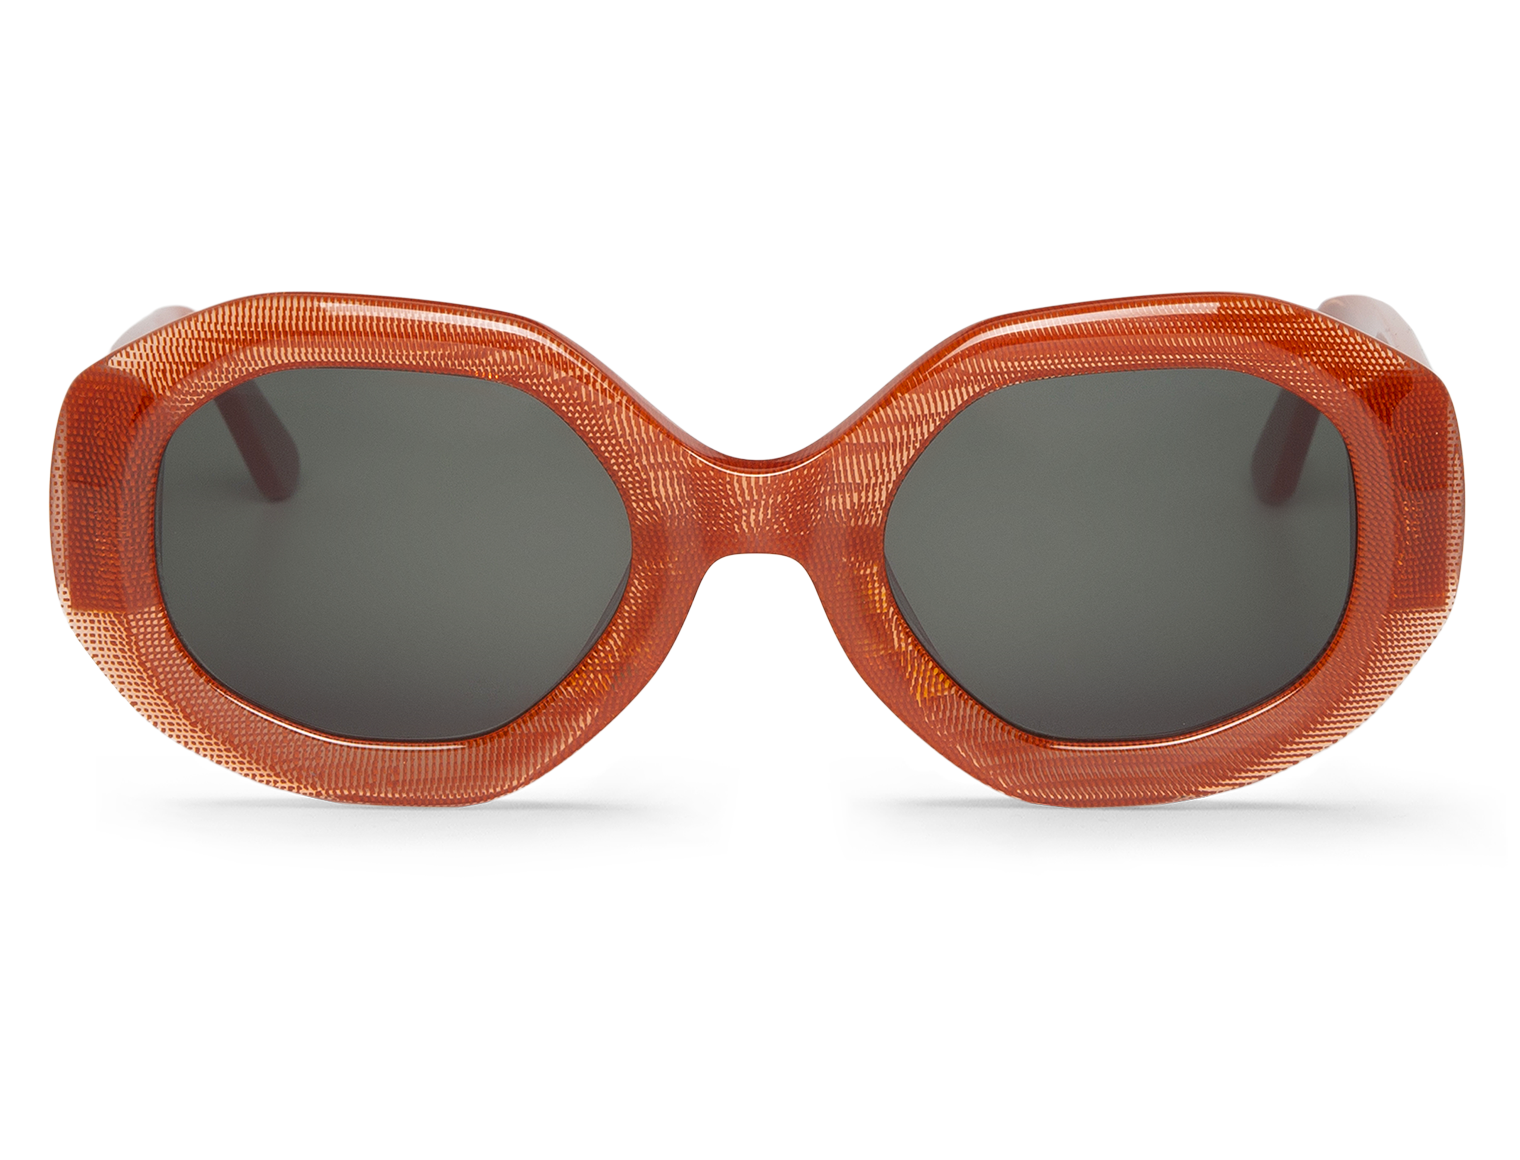 MR BOHO Colorao Vasasta Sunglasses with Classical Lenses